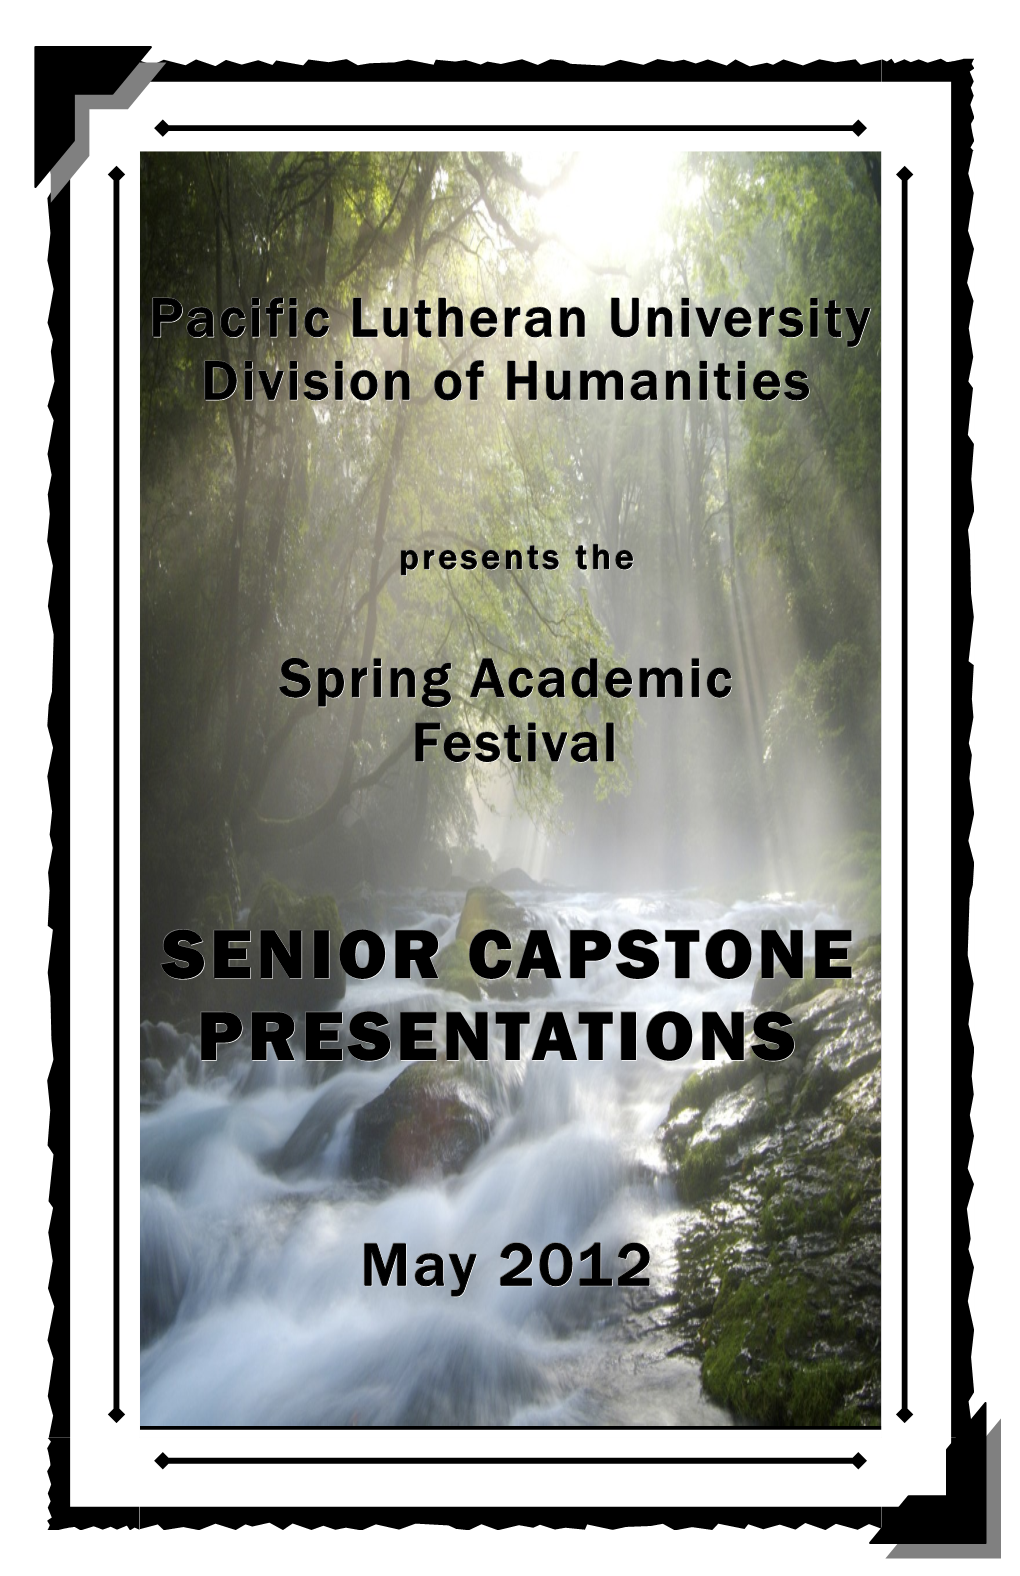 Senior Capstone Presentations